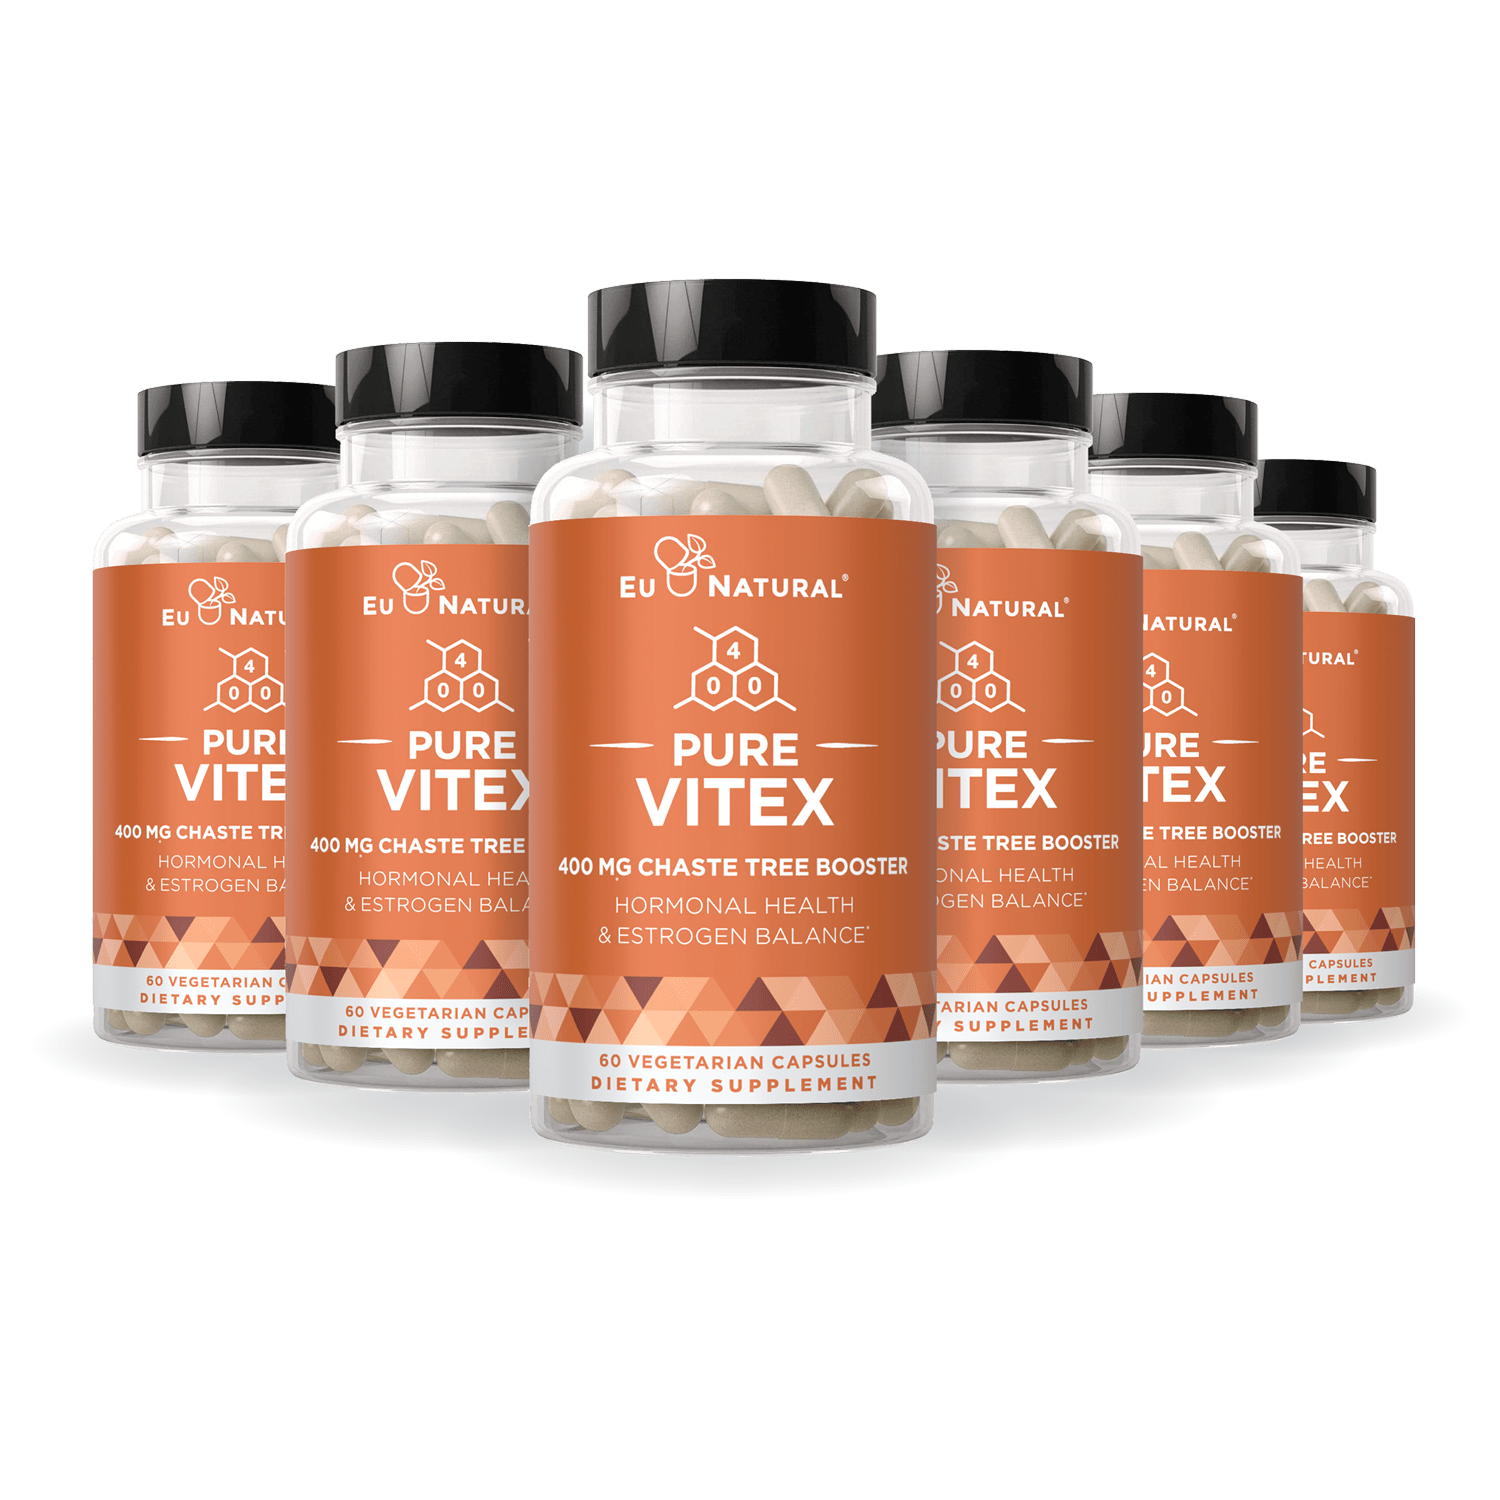 Eu Natural PURE VITEX — Chaste Tree Hormone & Estrogen Balance (6 Pack)